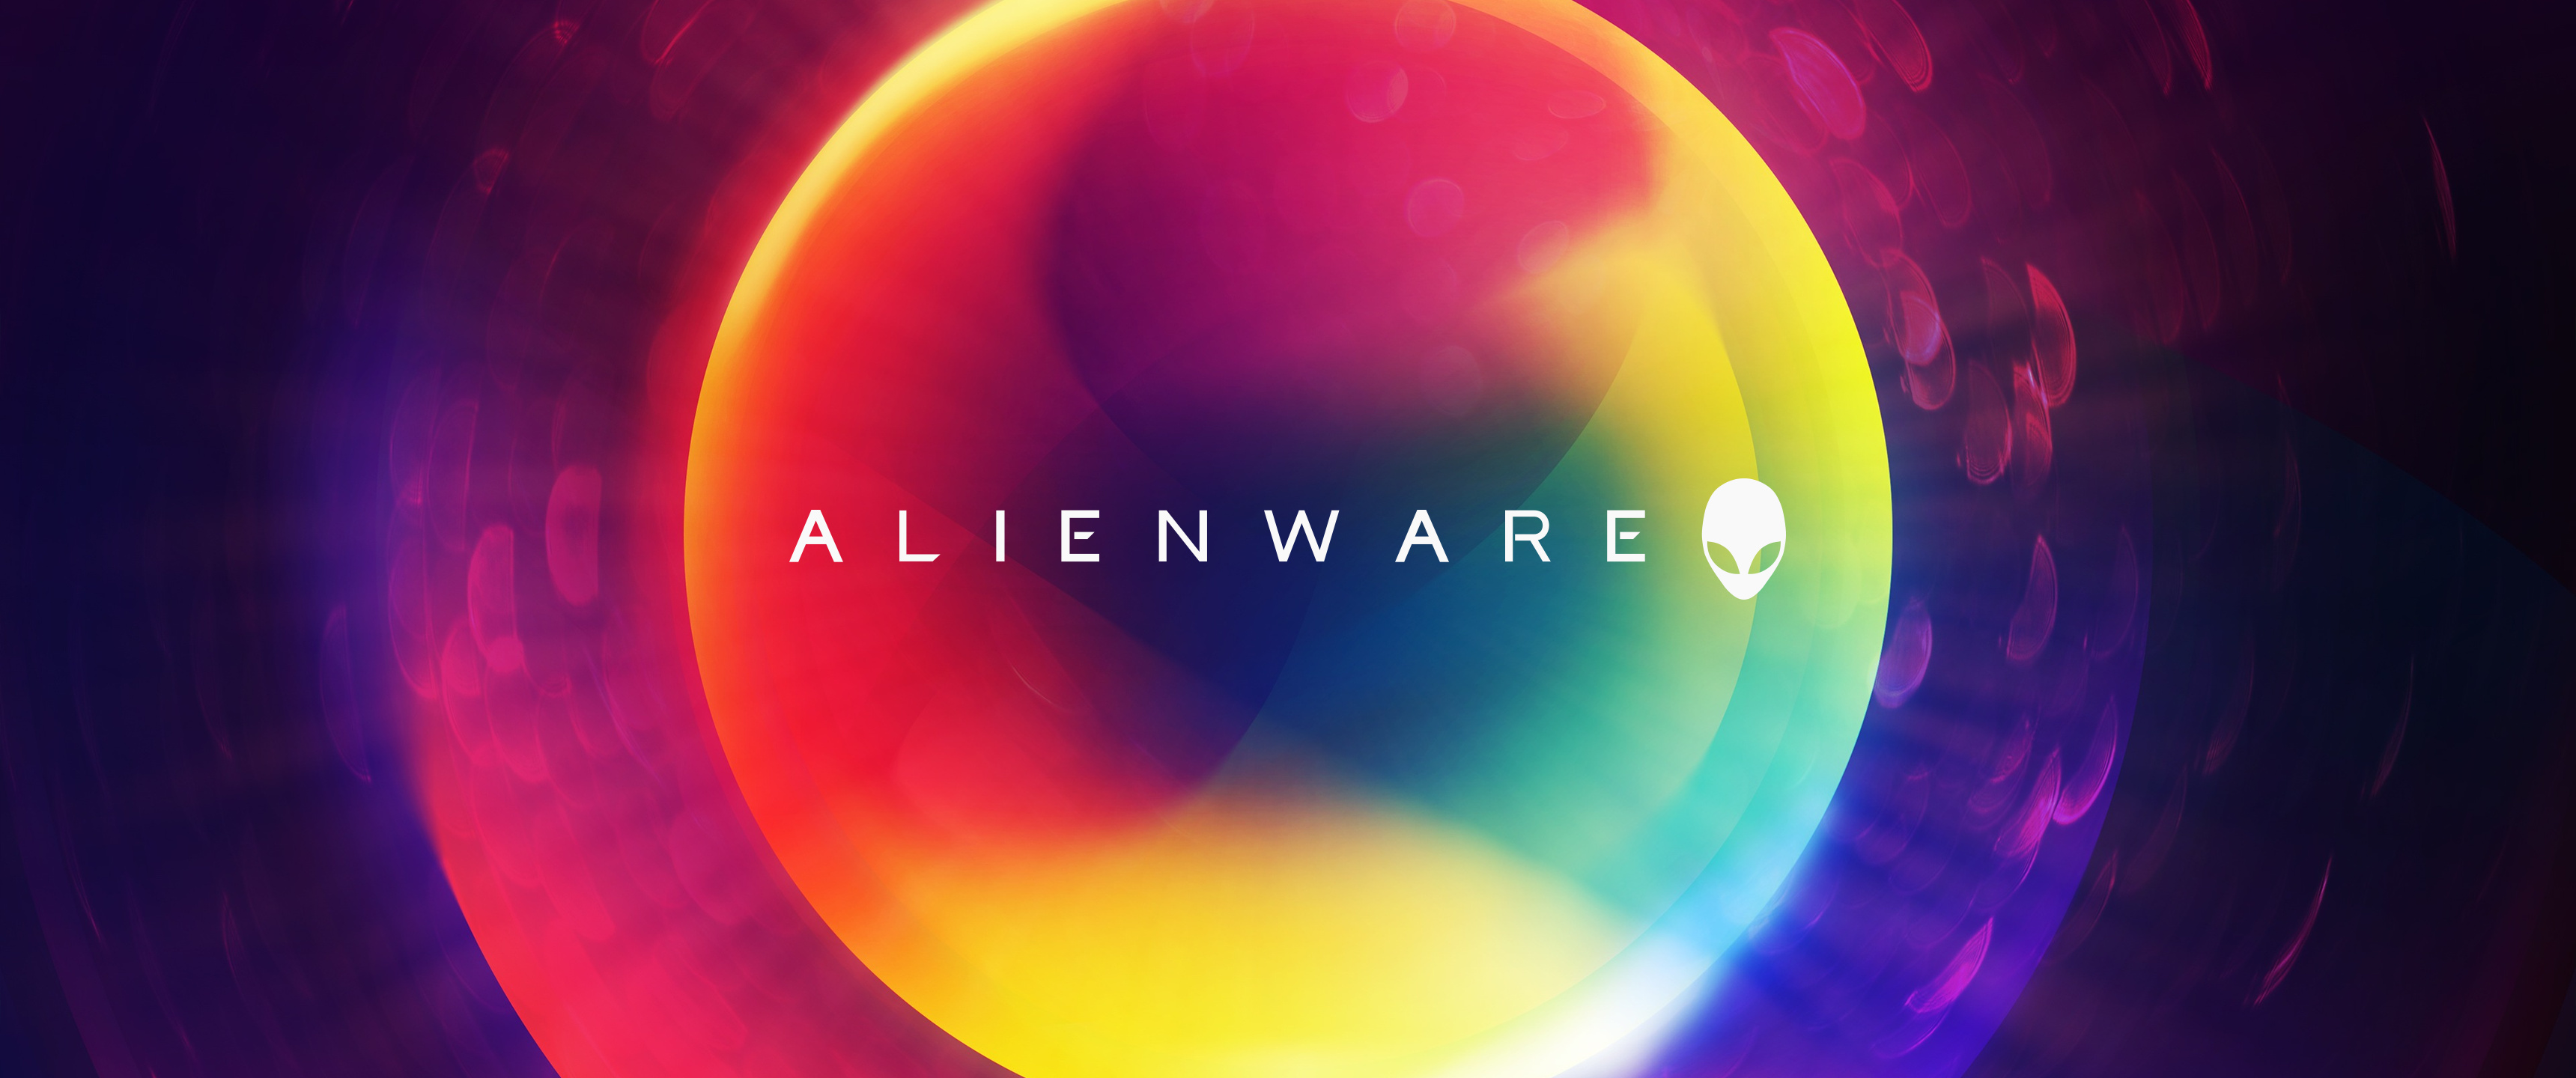 Alienware ultrawide wallpapers, Immersive gaming experience, Wide-screen delight, Alienware enthusiasts, 3440x1440 Dual Screen Desktop